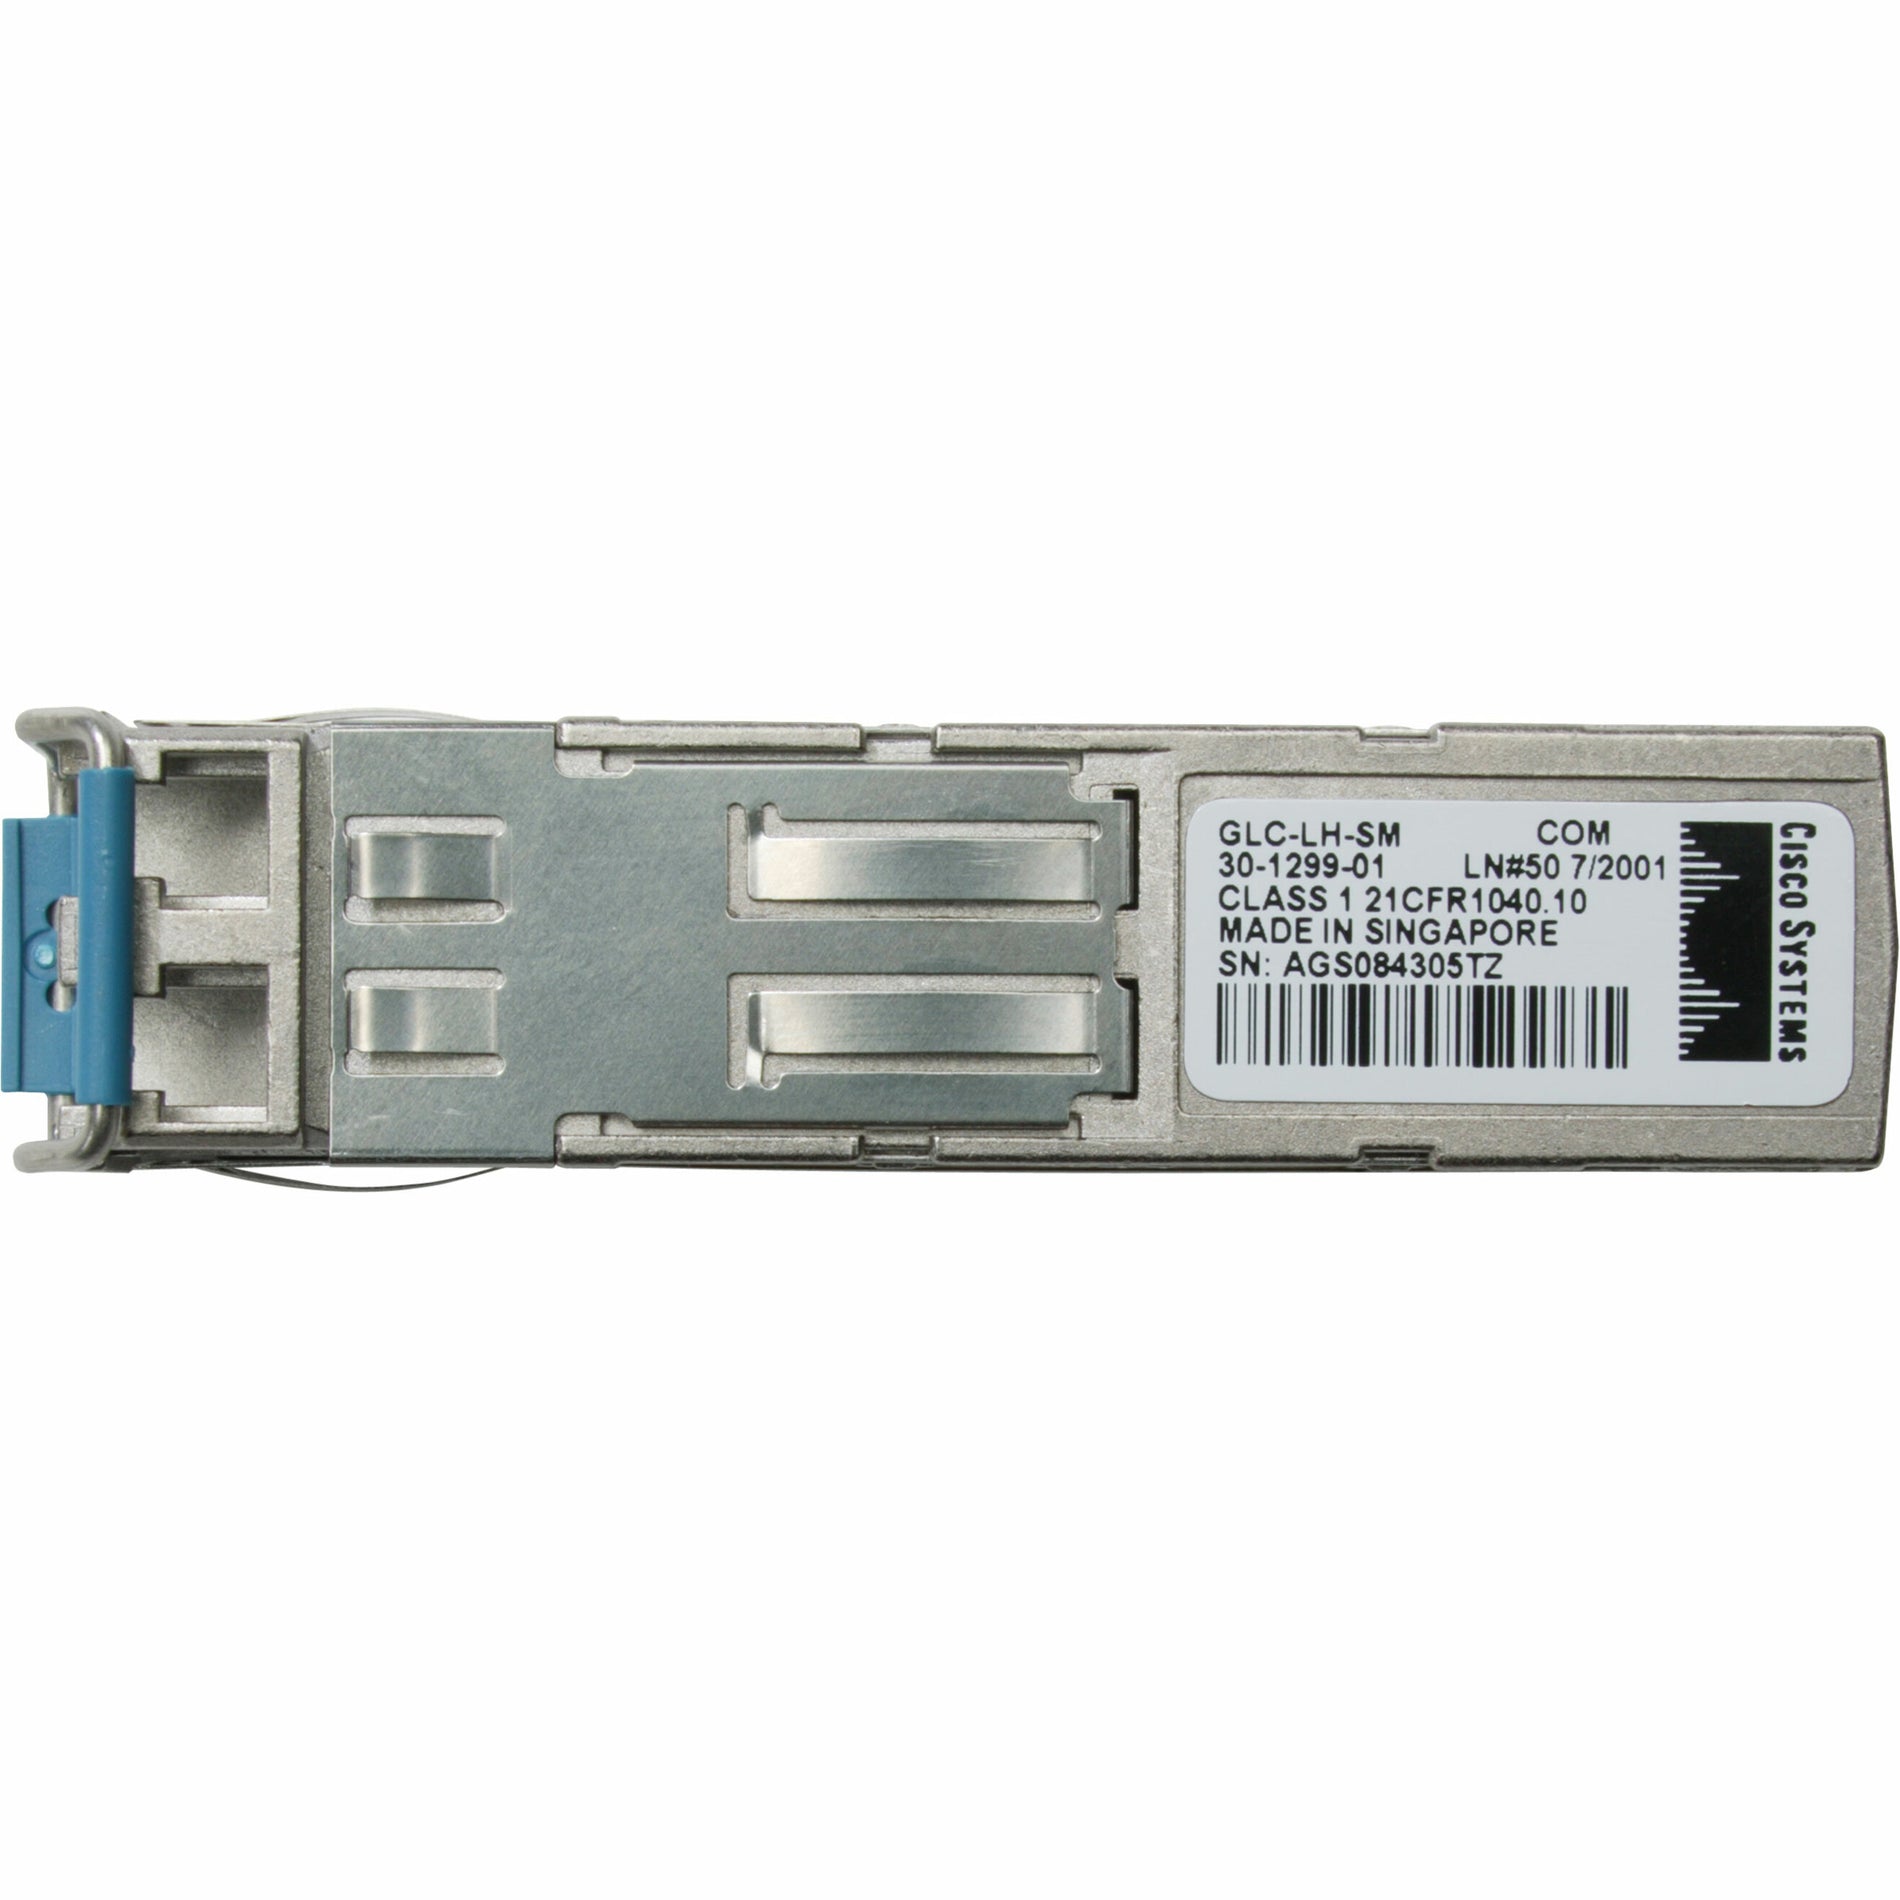 Cisco GLC-LH-SM 1000Base-LX/LH SFP Module